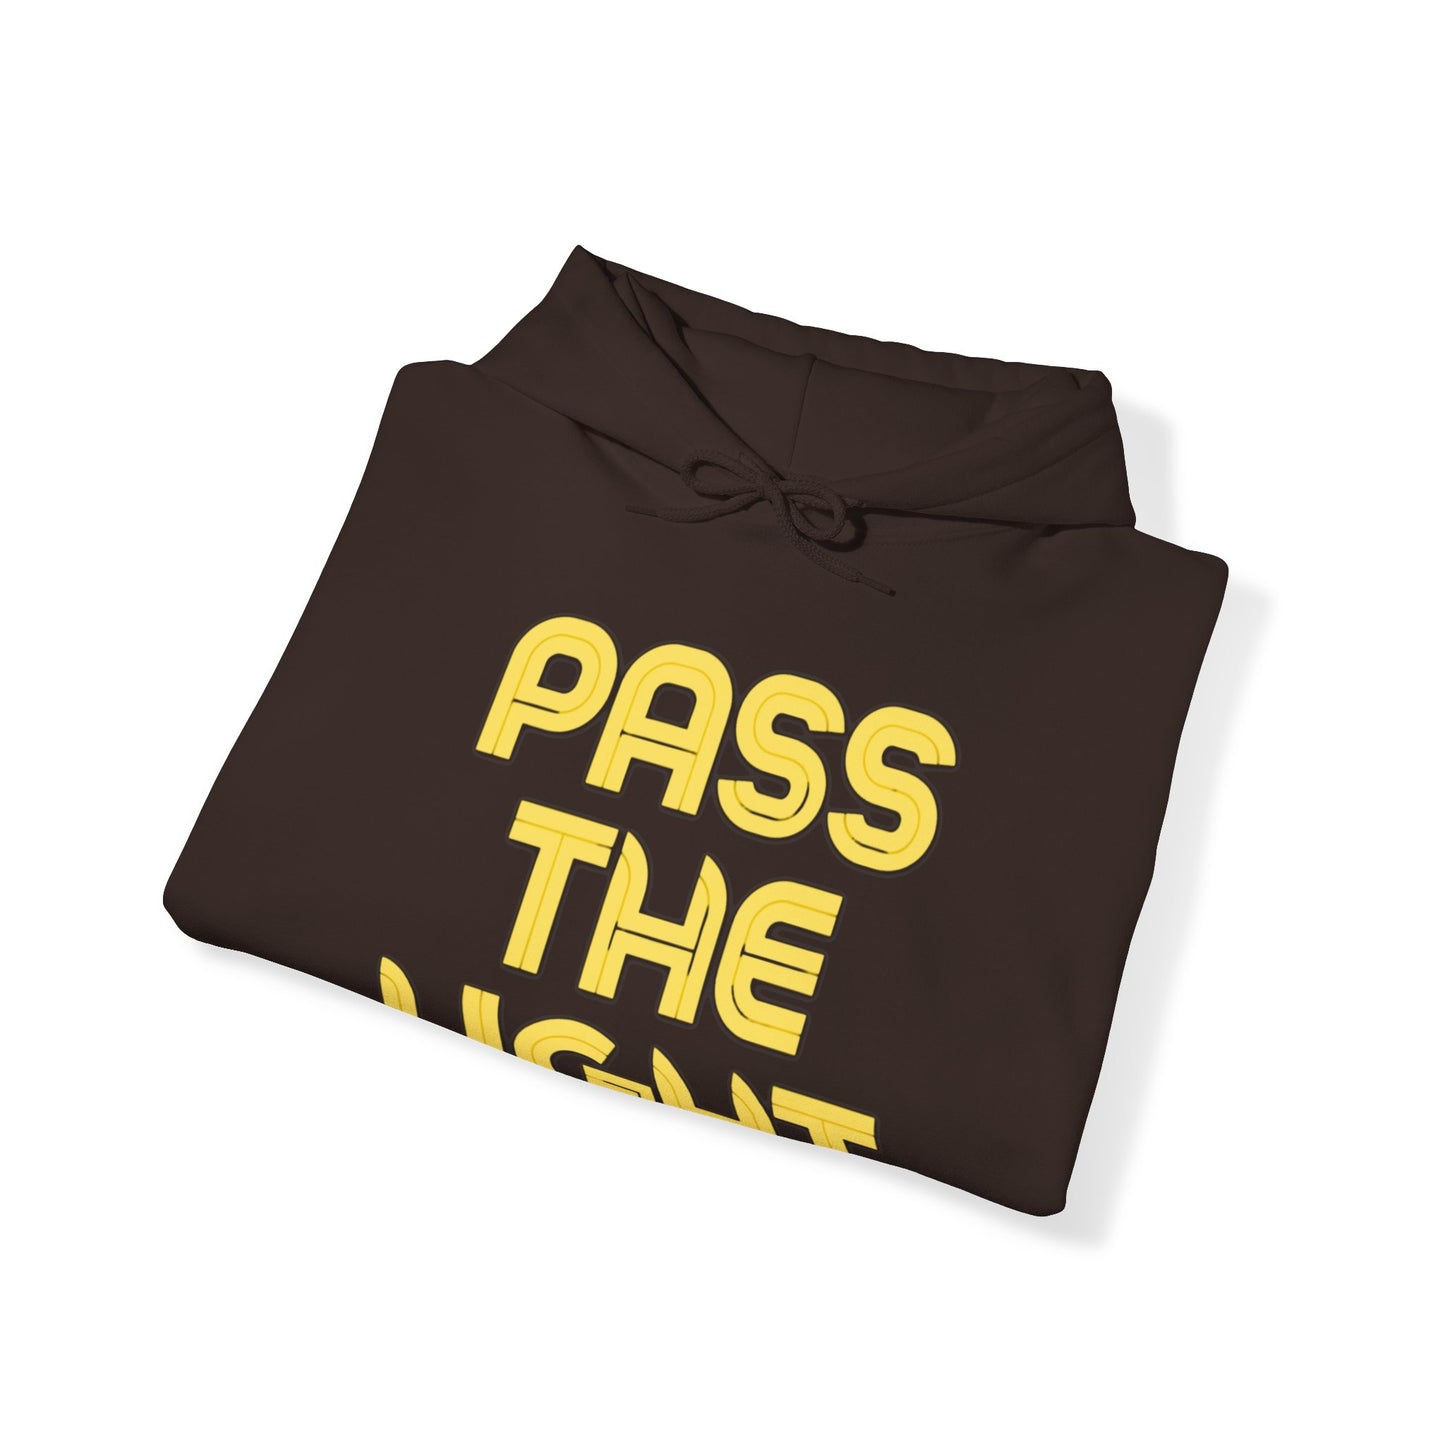 Light Passers Marketplace Pass the Light Unisex Heavy Hooded Sweatshirt, Simple Messages